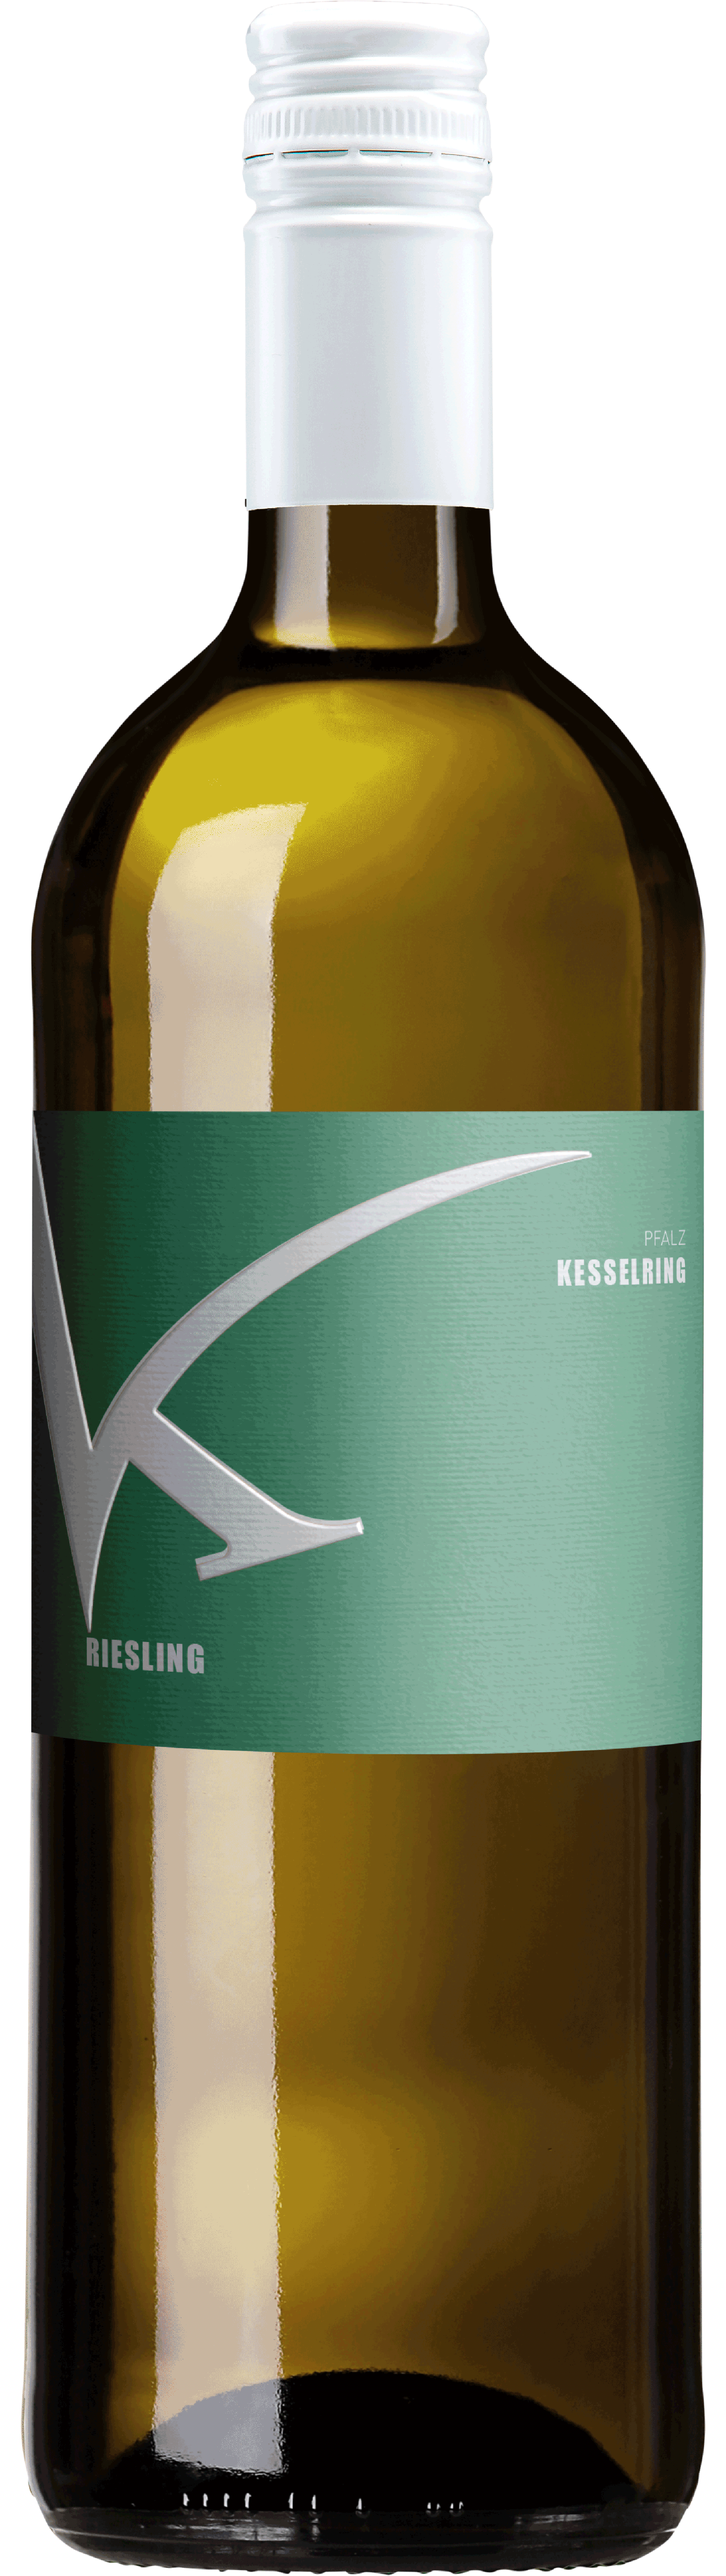 2021 Riesling Liter Qualitätswein - Ökolog. Anbau 1.0l